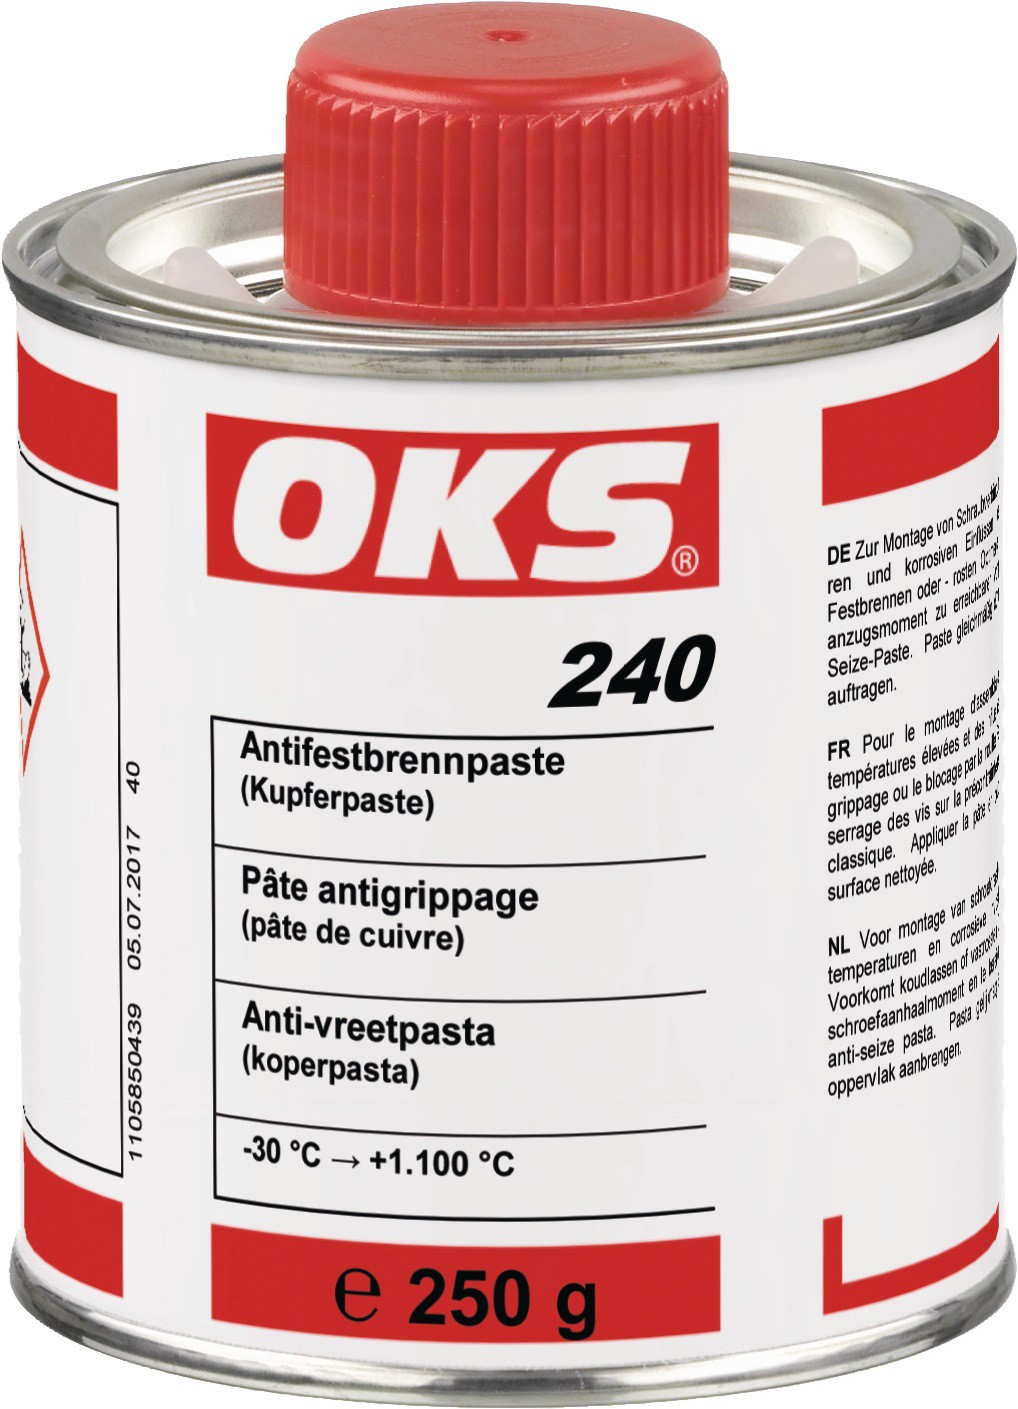 OKS 240 250 g Antifestbrennpaste (Kupferpaste)